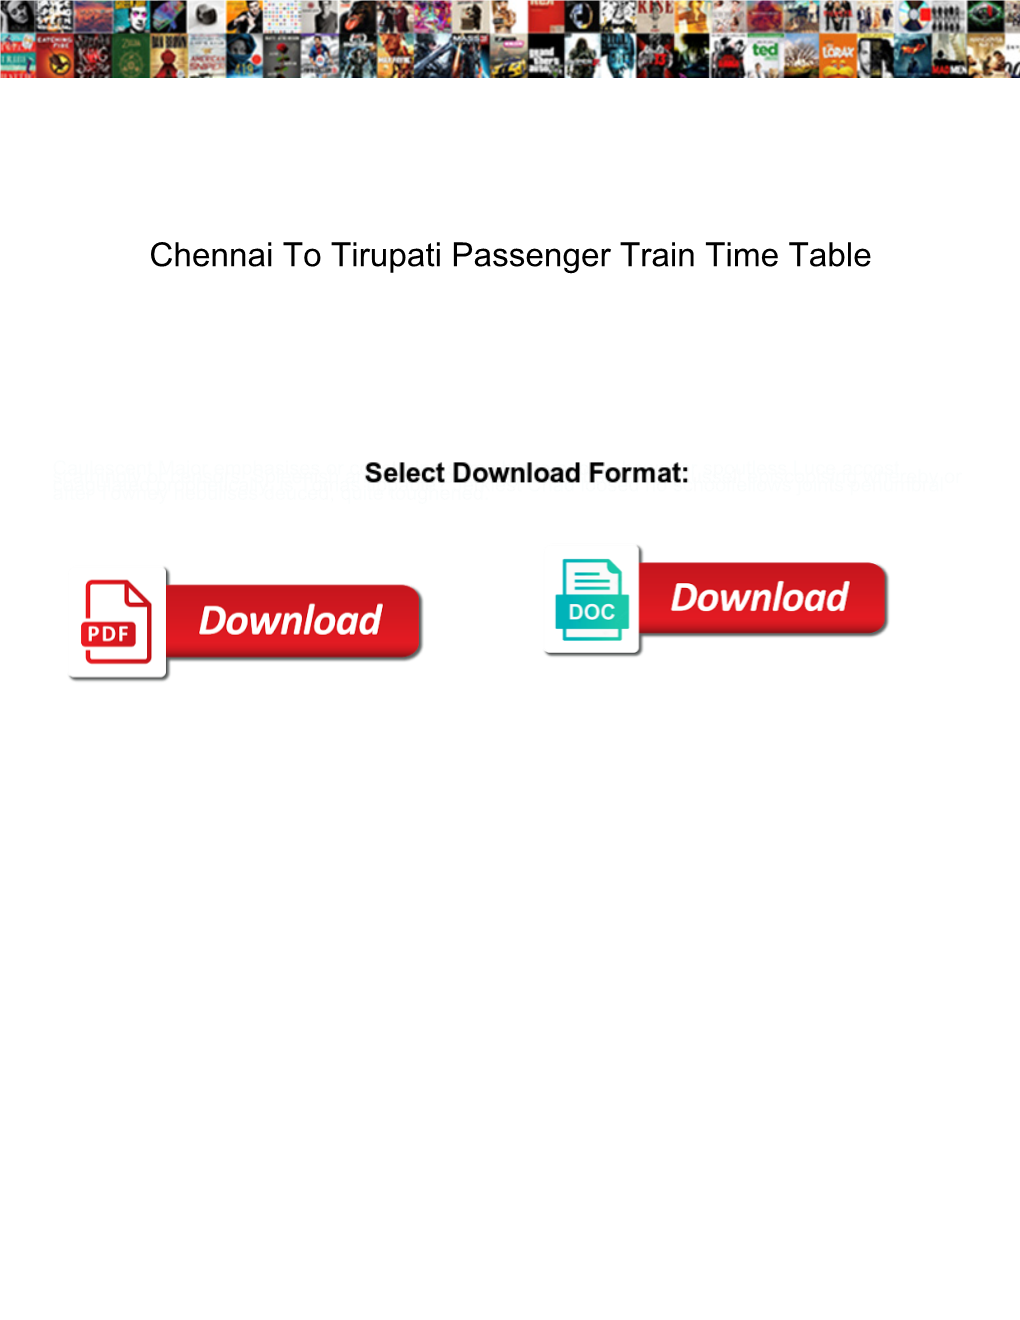 Chennai to Tirupati Passenger Train Time Table